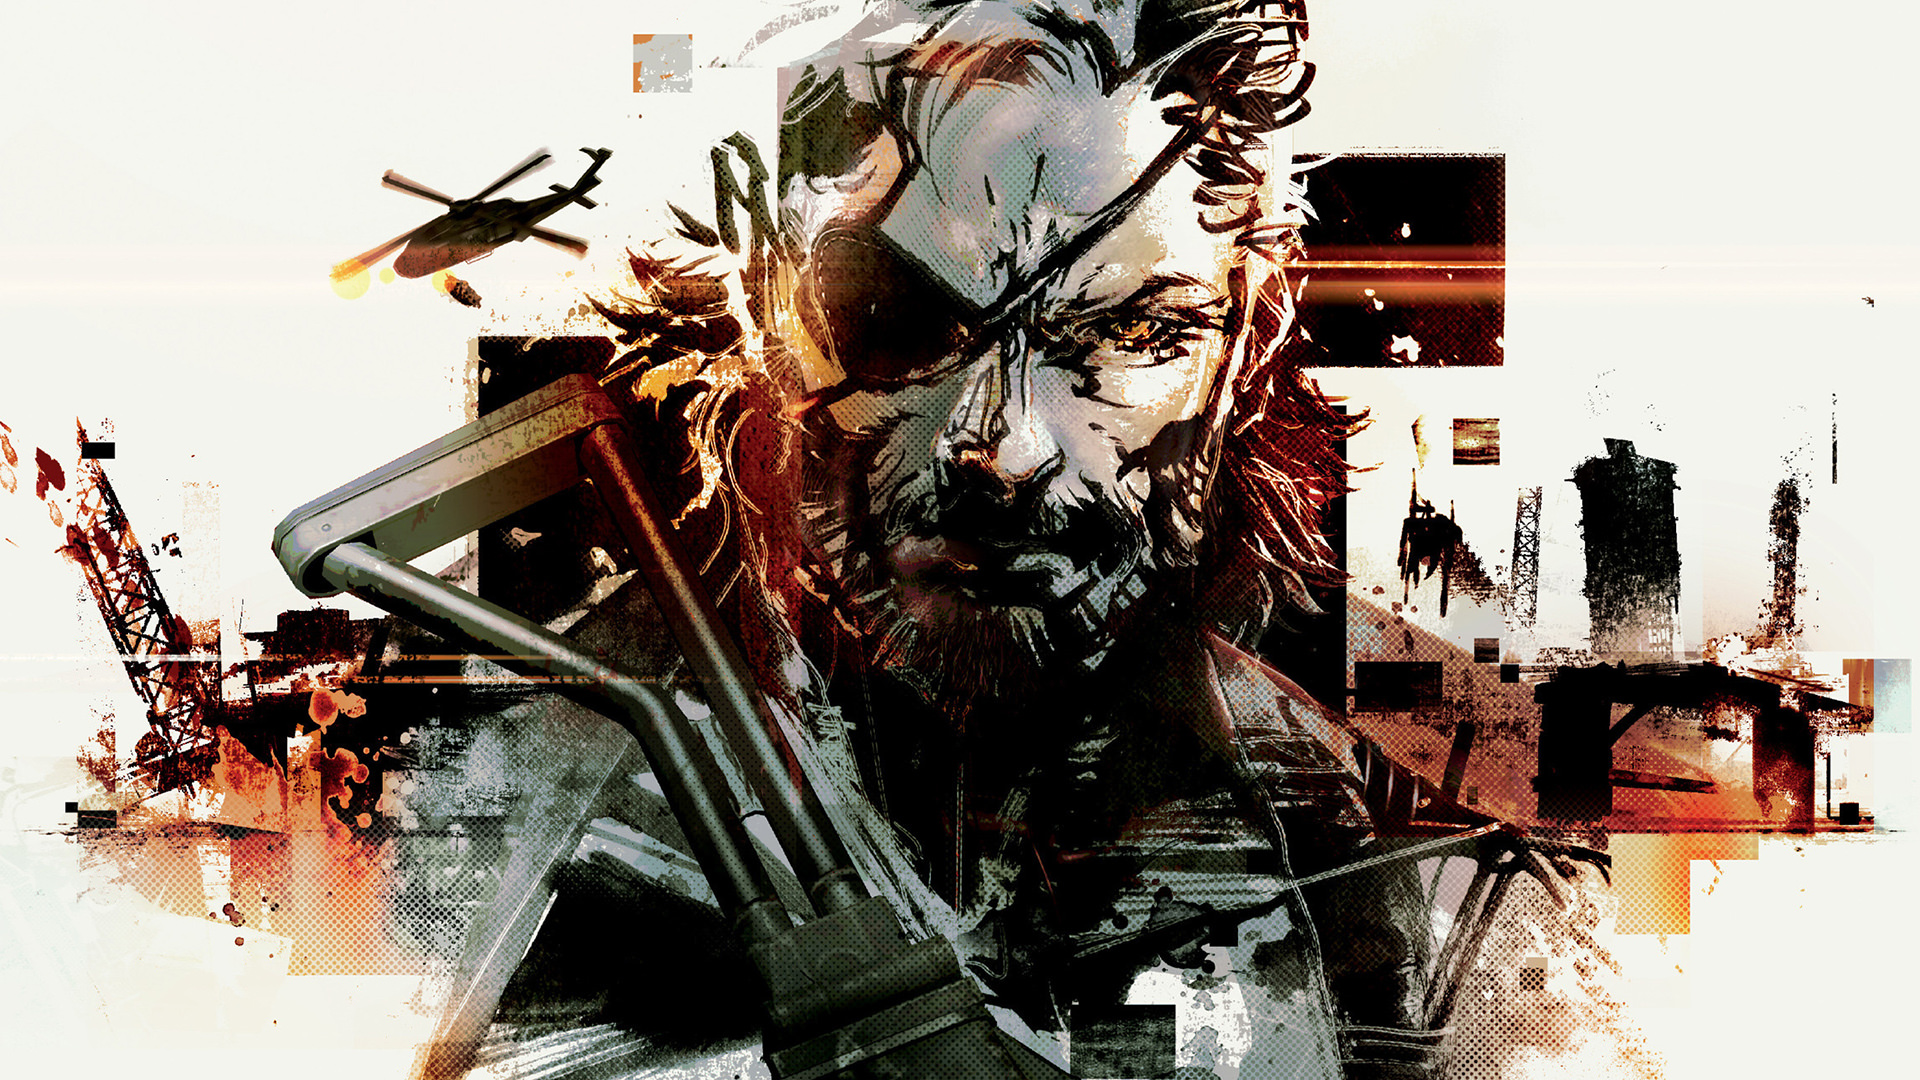 Metal Gear Solid Ground Zeroes Art - 1920x1080 Wallpaper - teahub.io